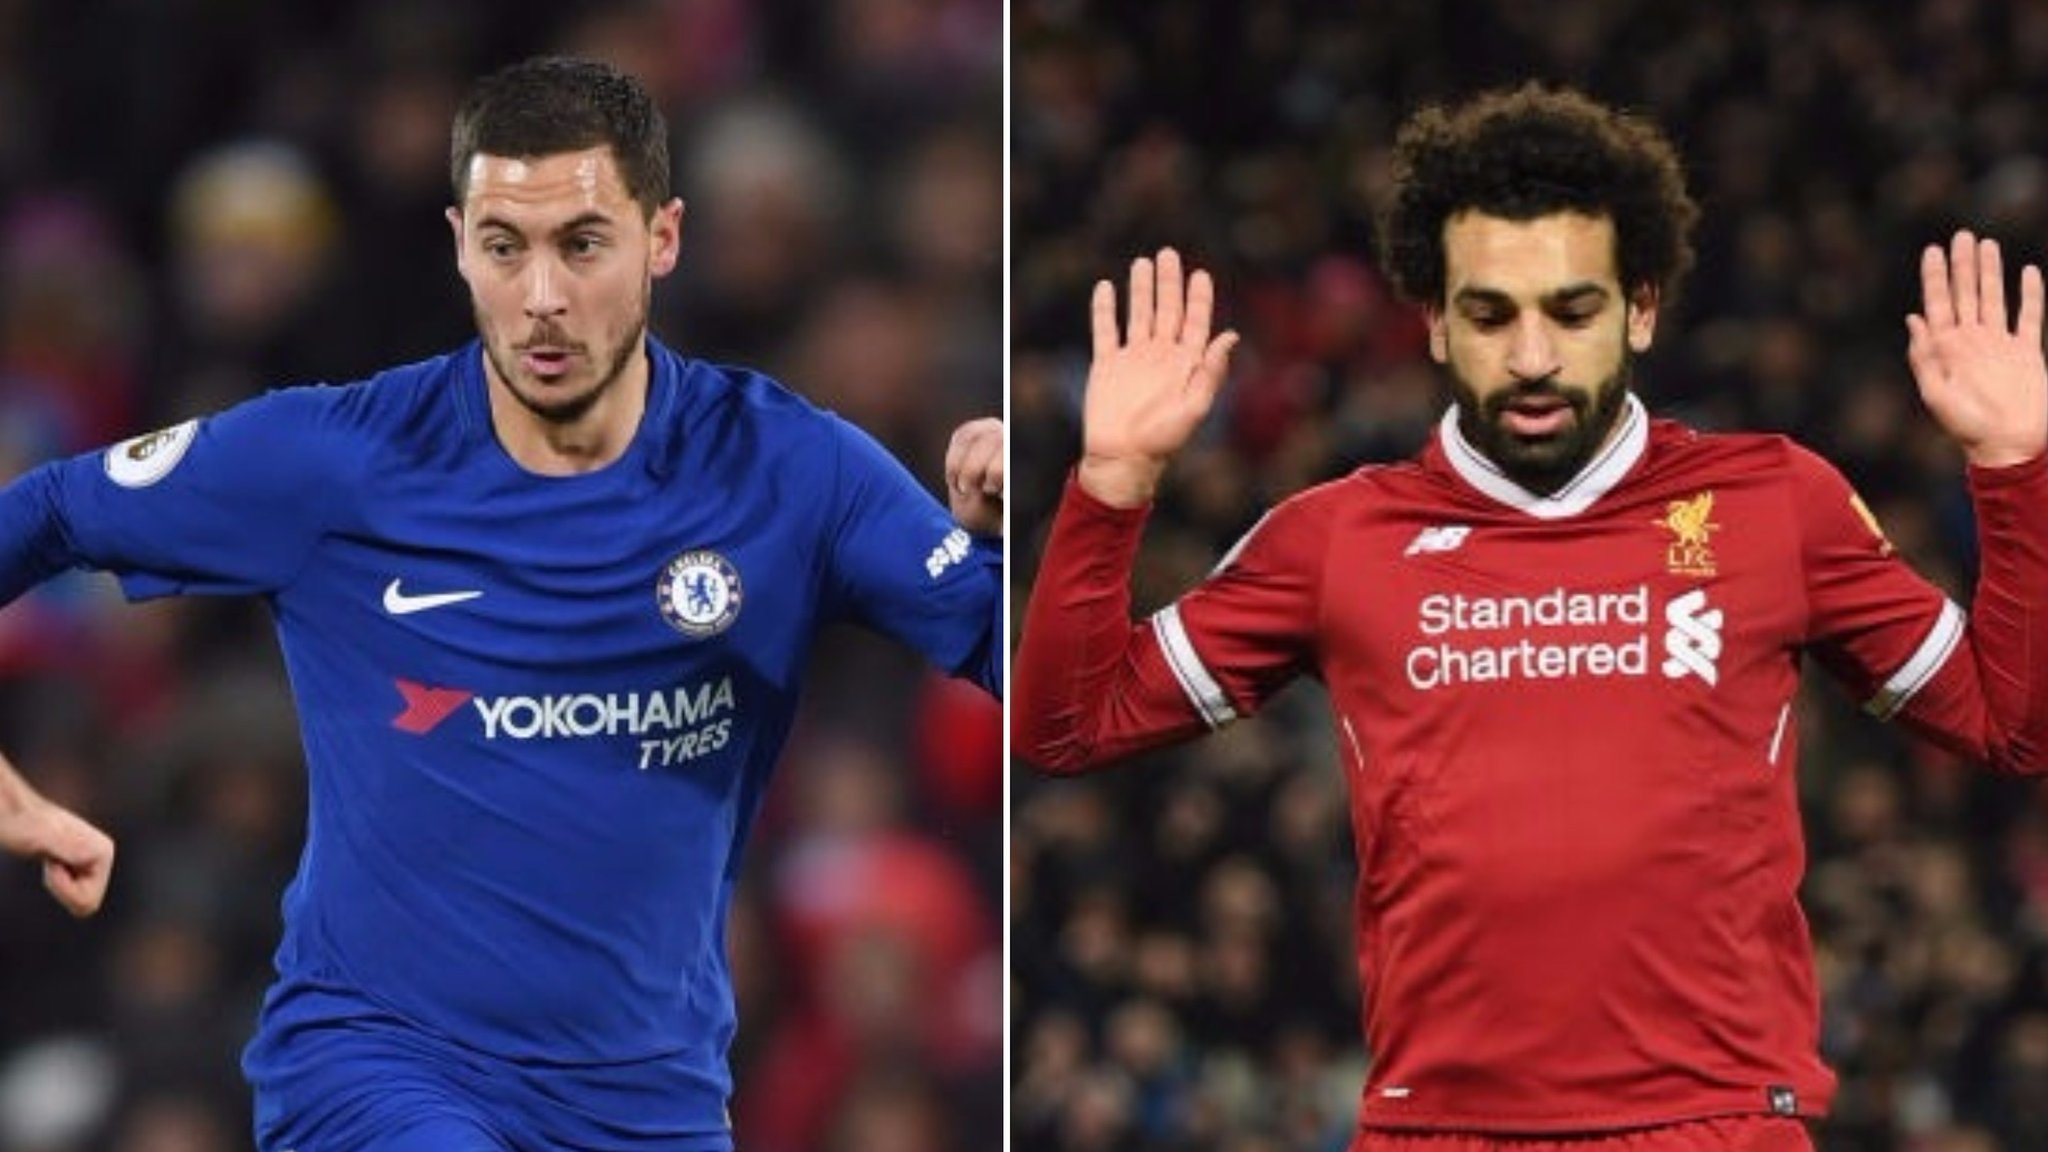 Hazard or Salah - who's had the better season so far? Vote